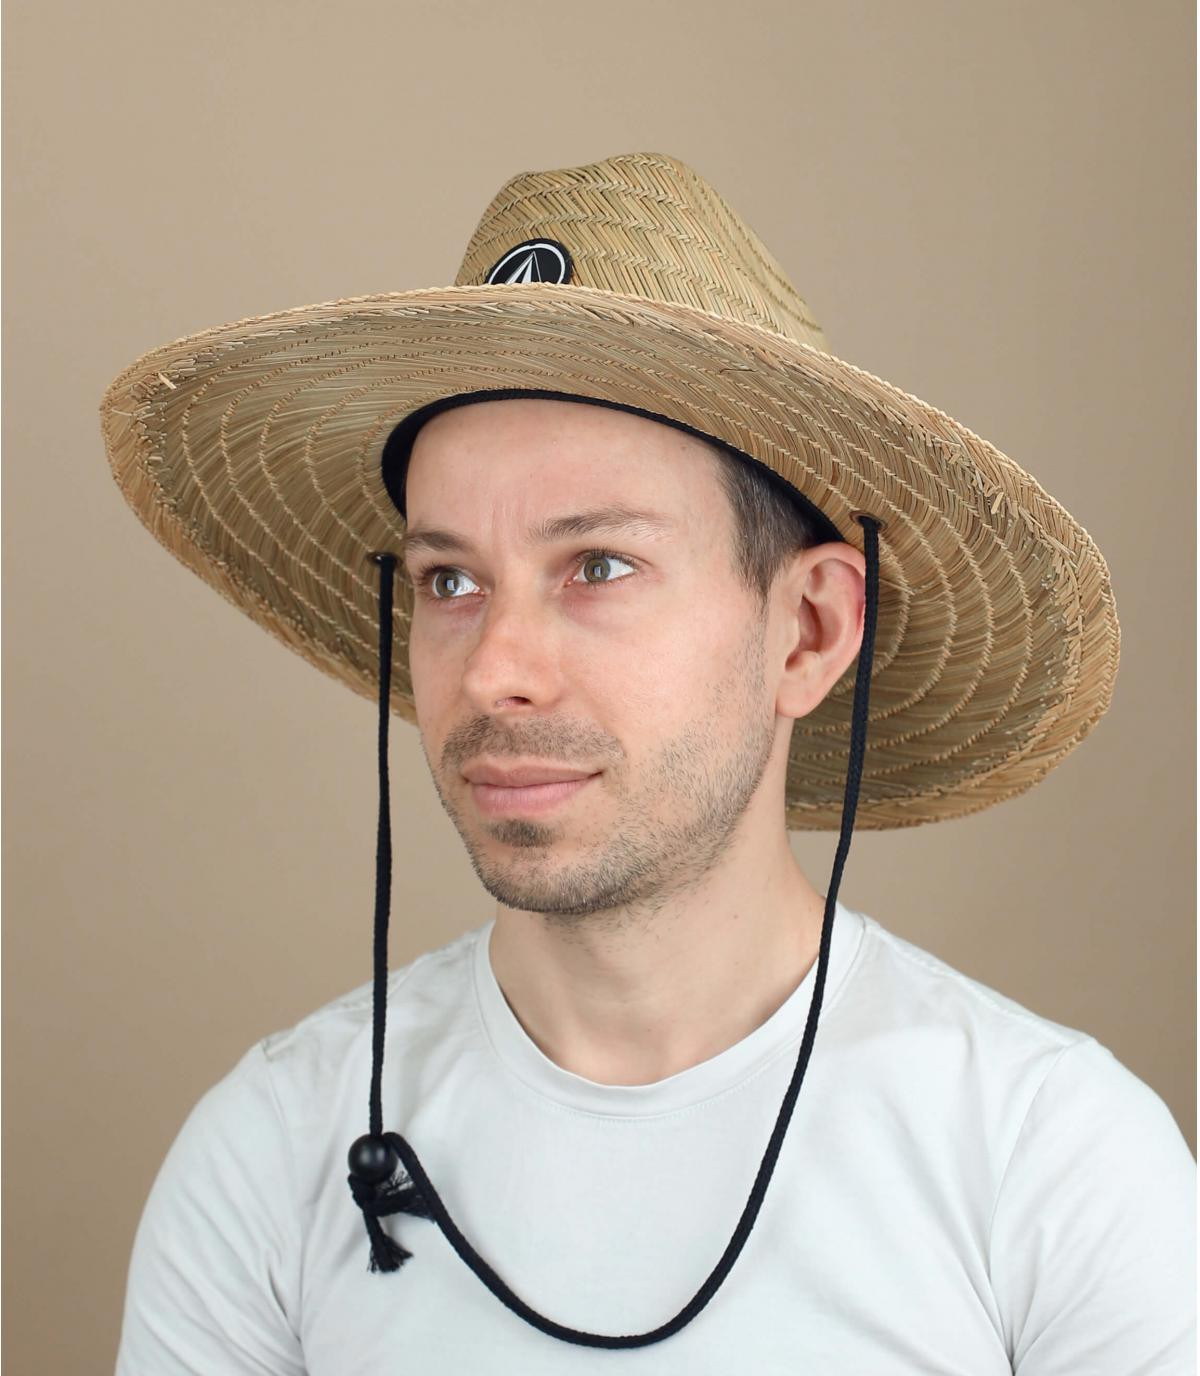 sombrero paja Volcom - Quarter Straw Hat natural Volcom : Headict